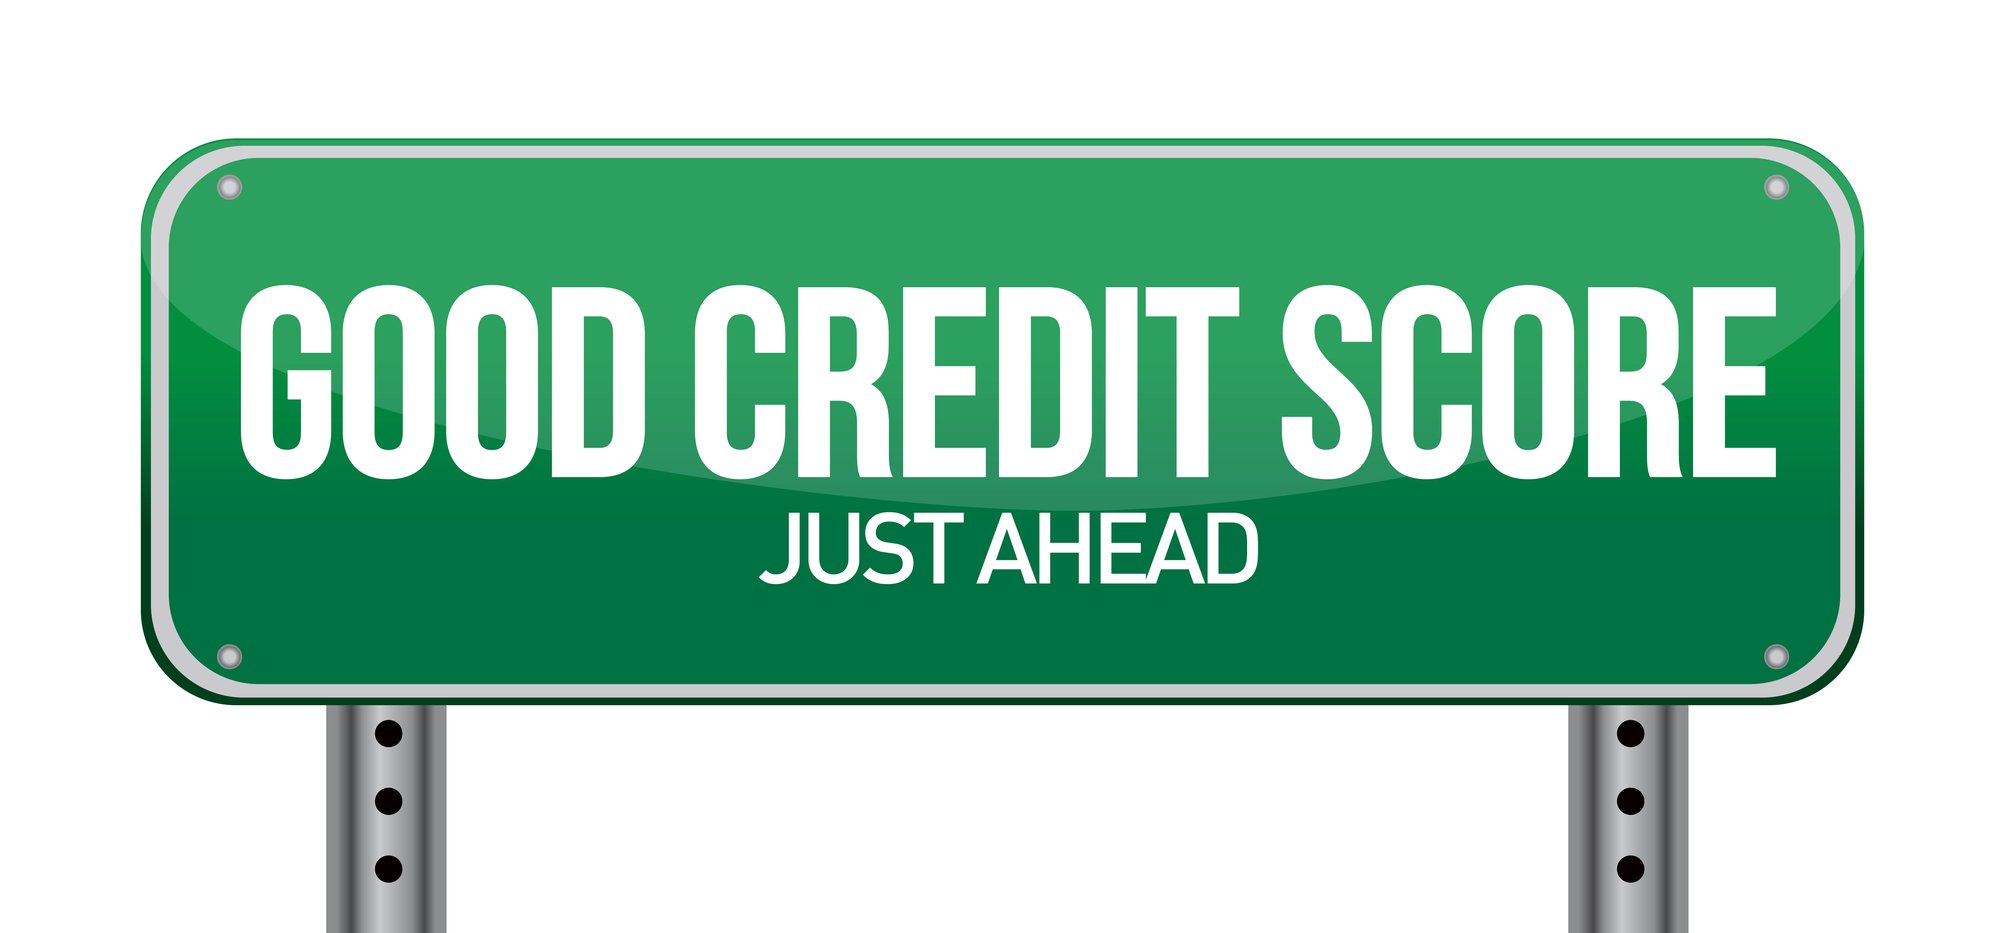 Good credit scores just ahead